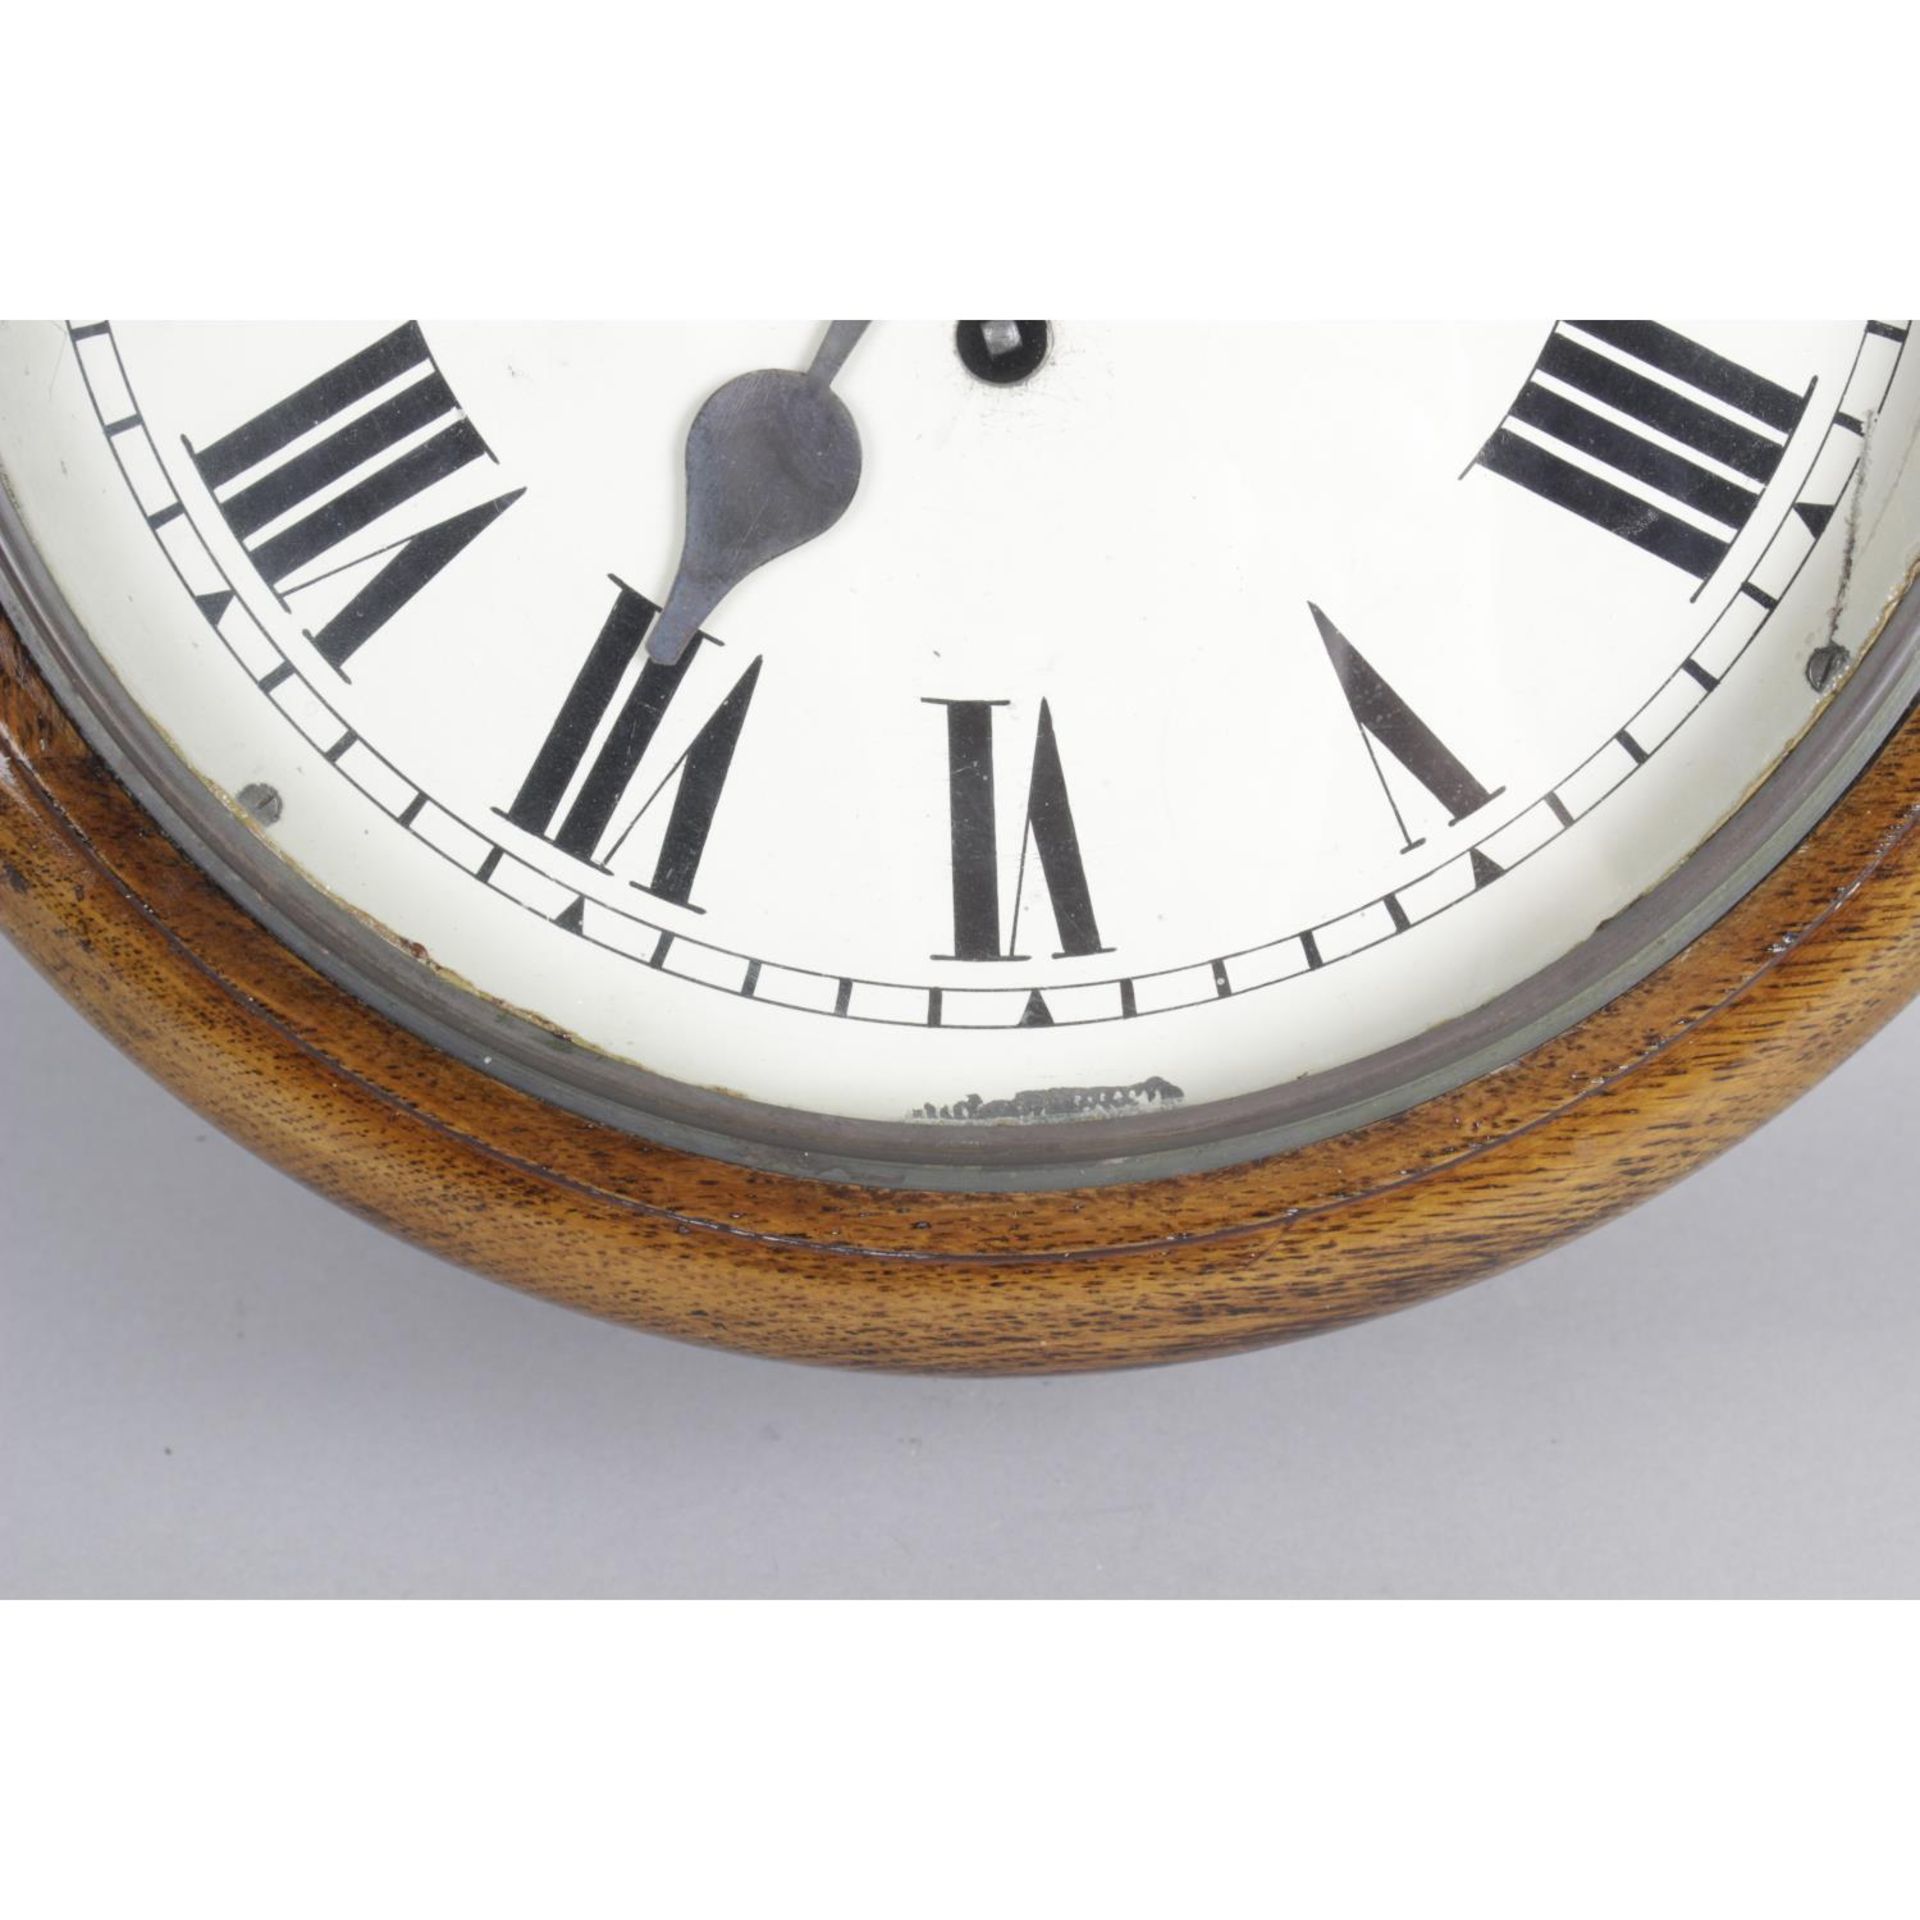 An early 20th century oak cased school-style wall clock, - Image 2 of 3